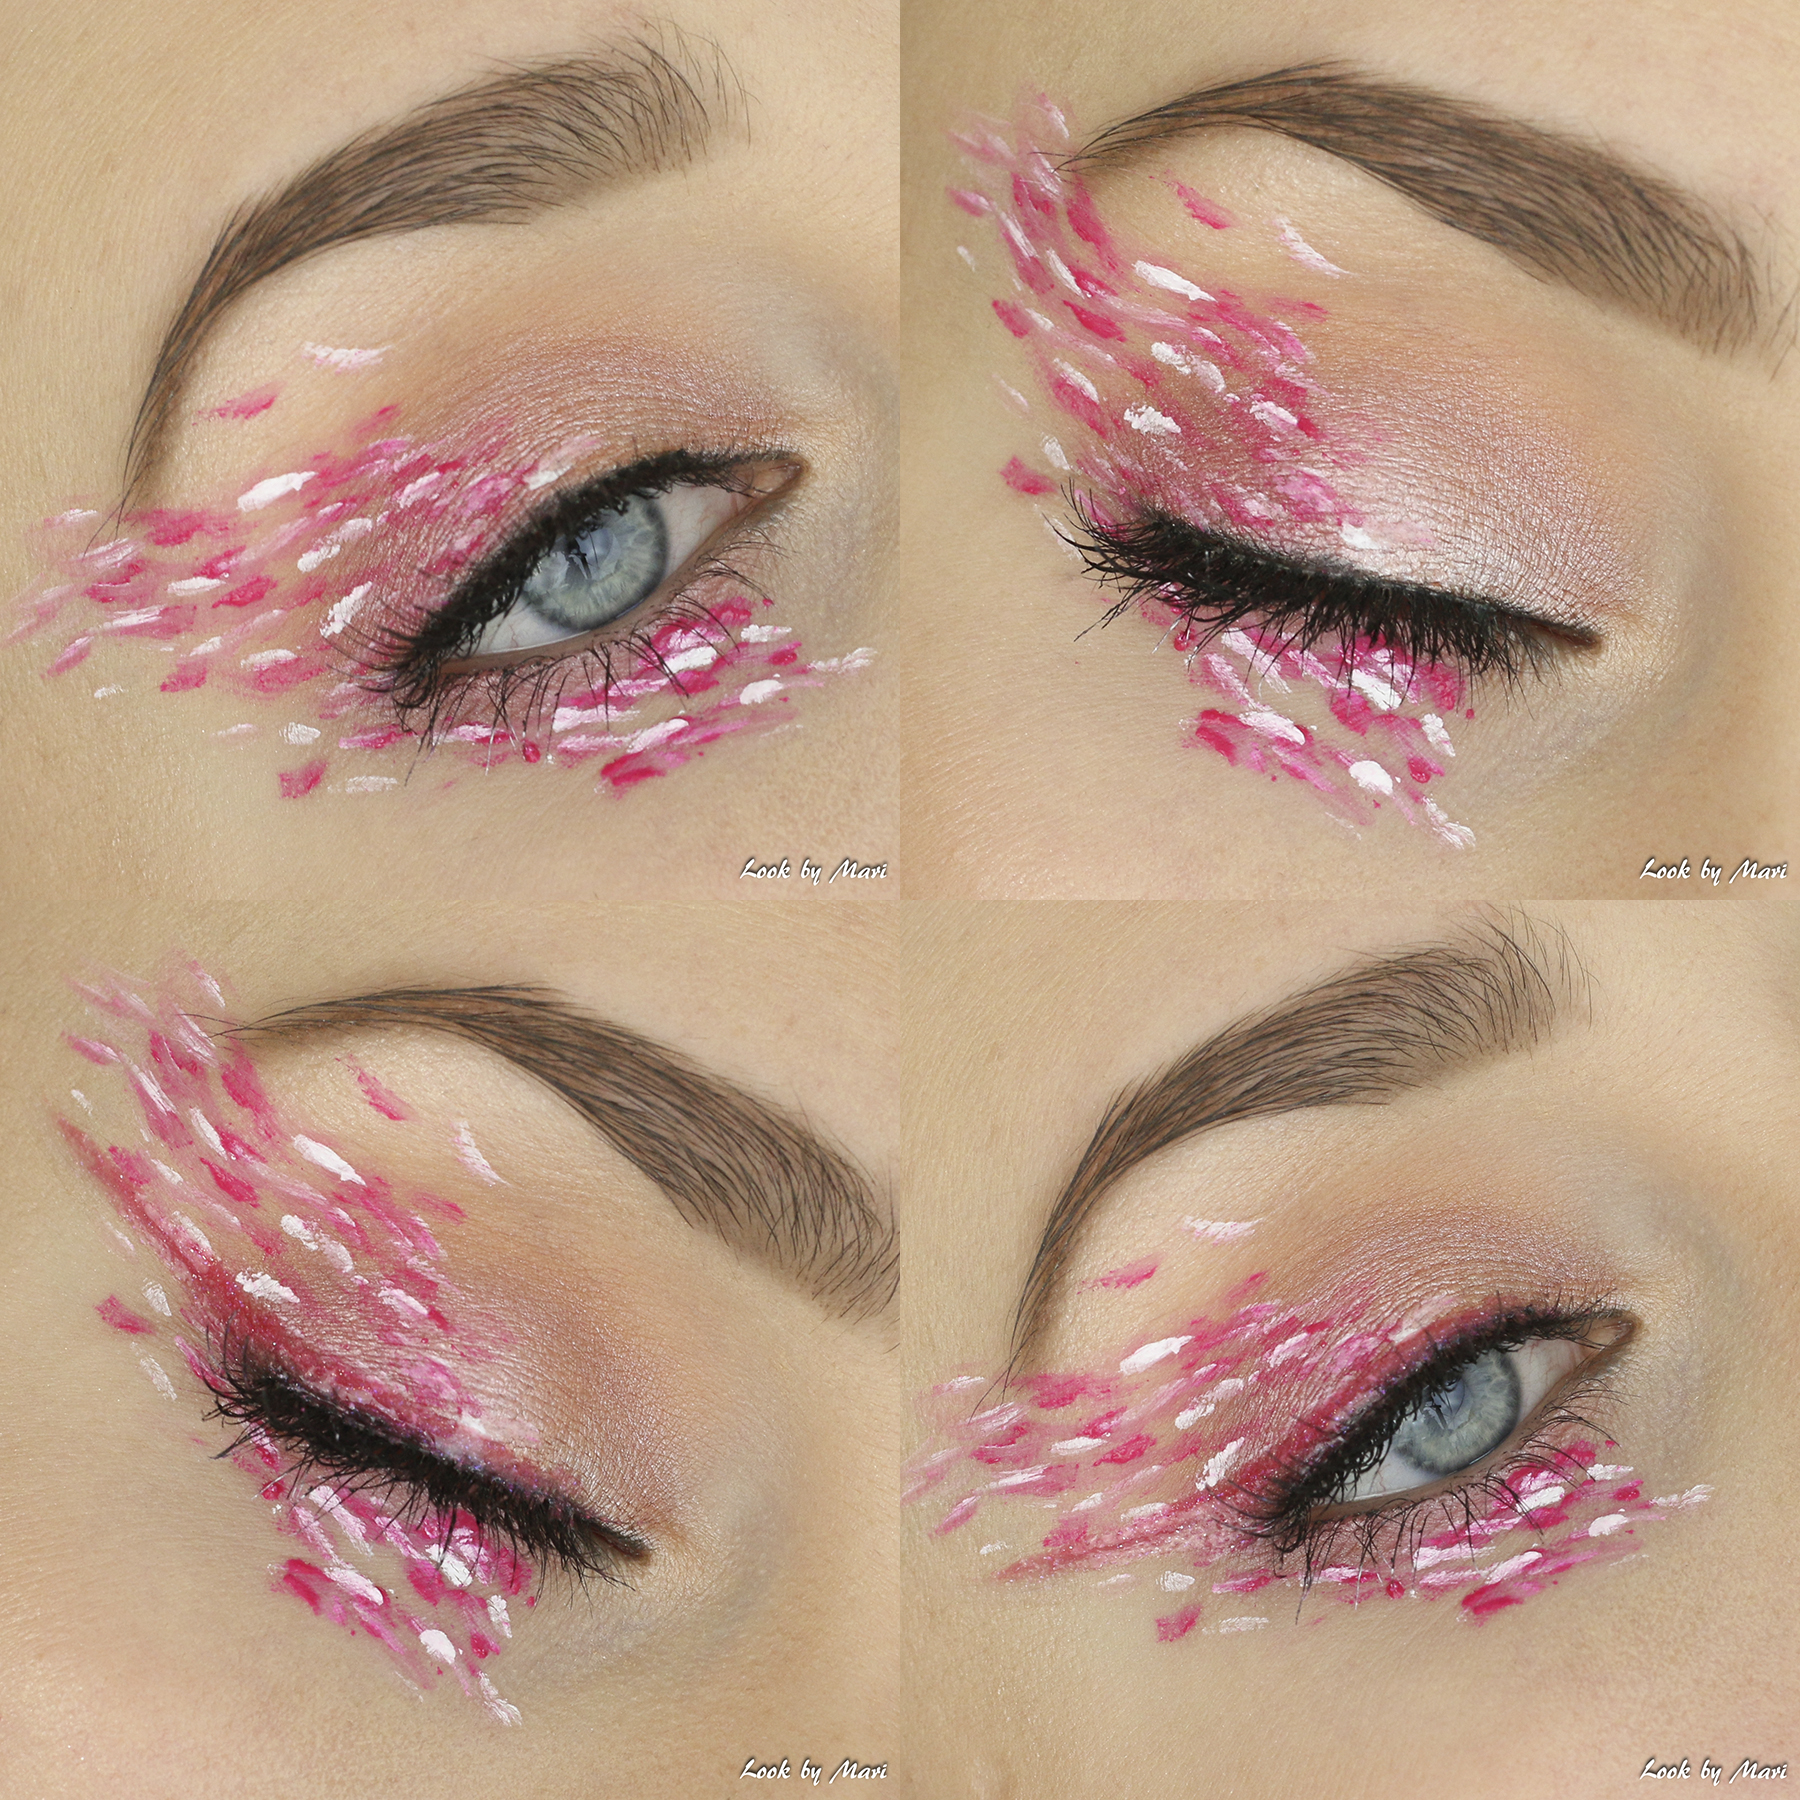 2 eye makeup ideas pink tutorial eye makeup art makeup artist artistic makeup ideas inspo inspiration